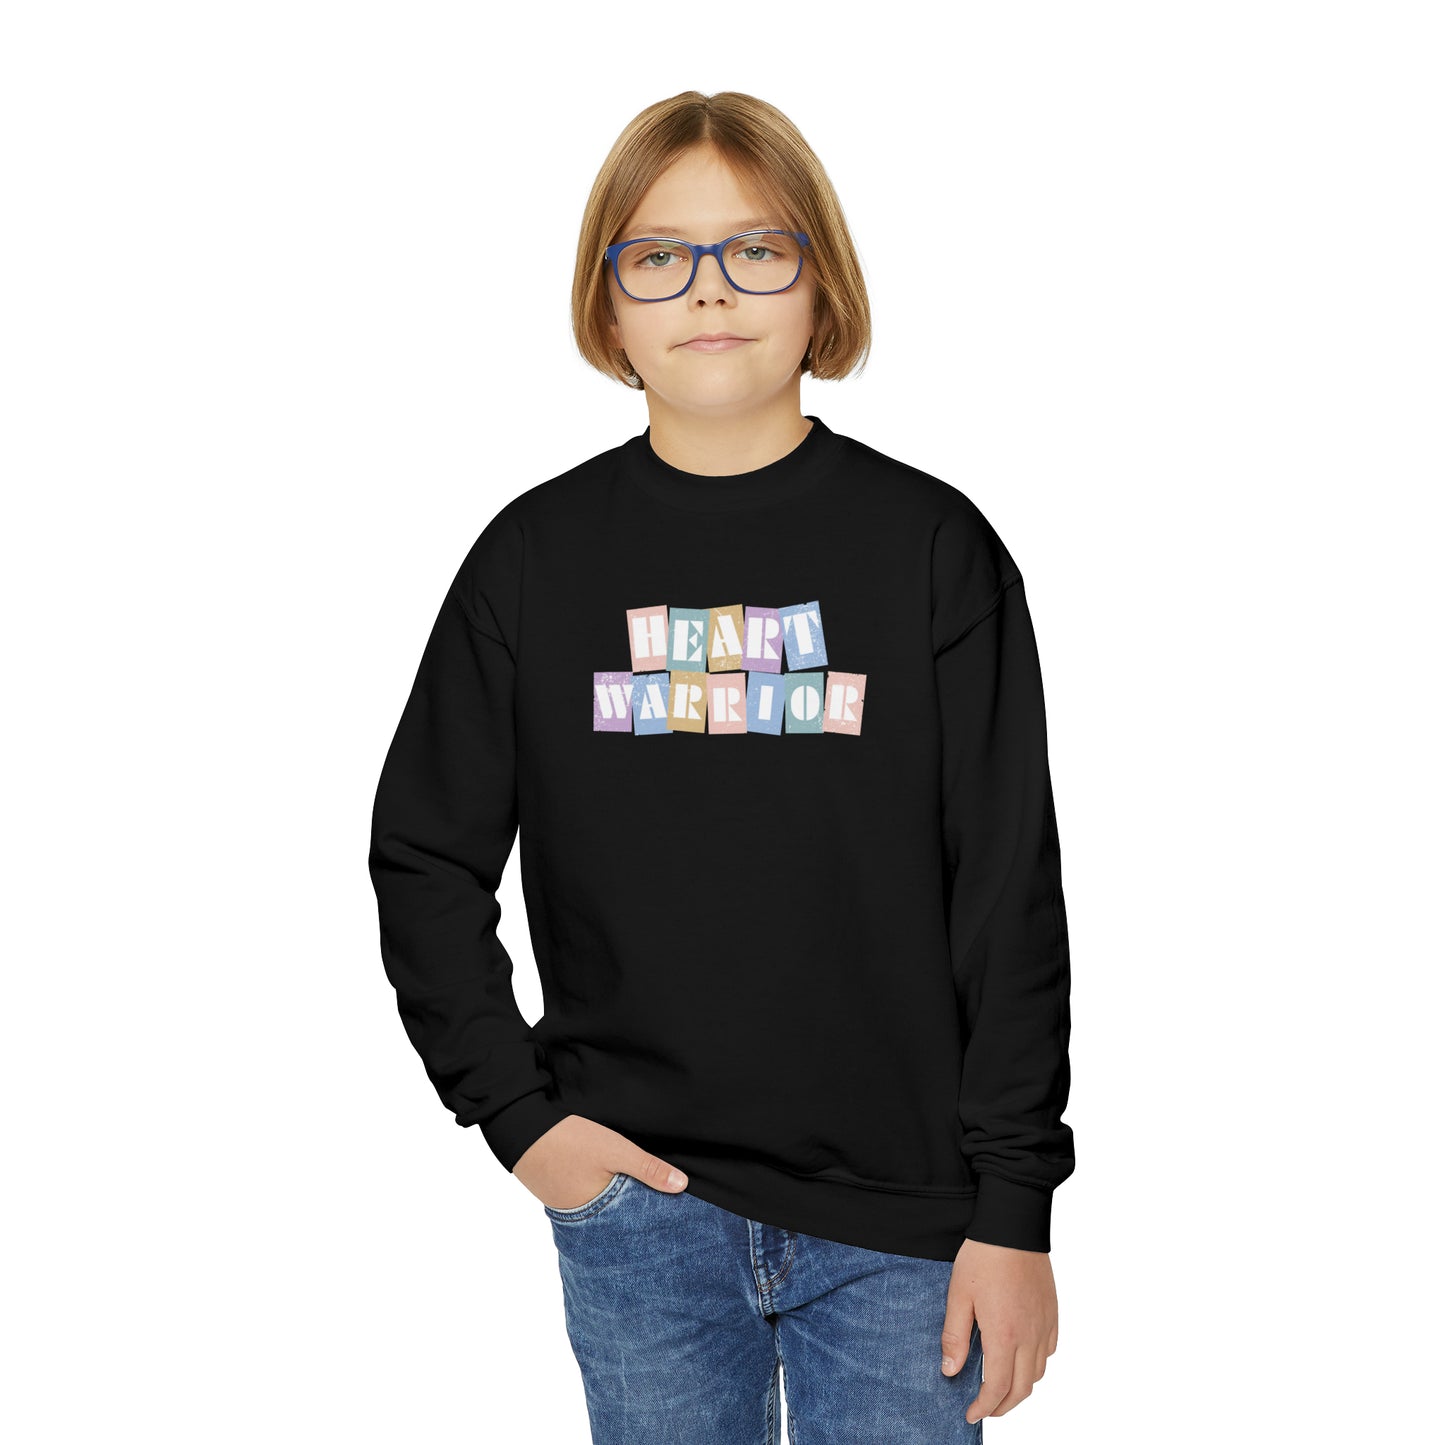 
                  
                    Heart Warrior Vintage Youth Crewneck Sweatshirt
                  
                